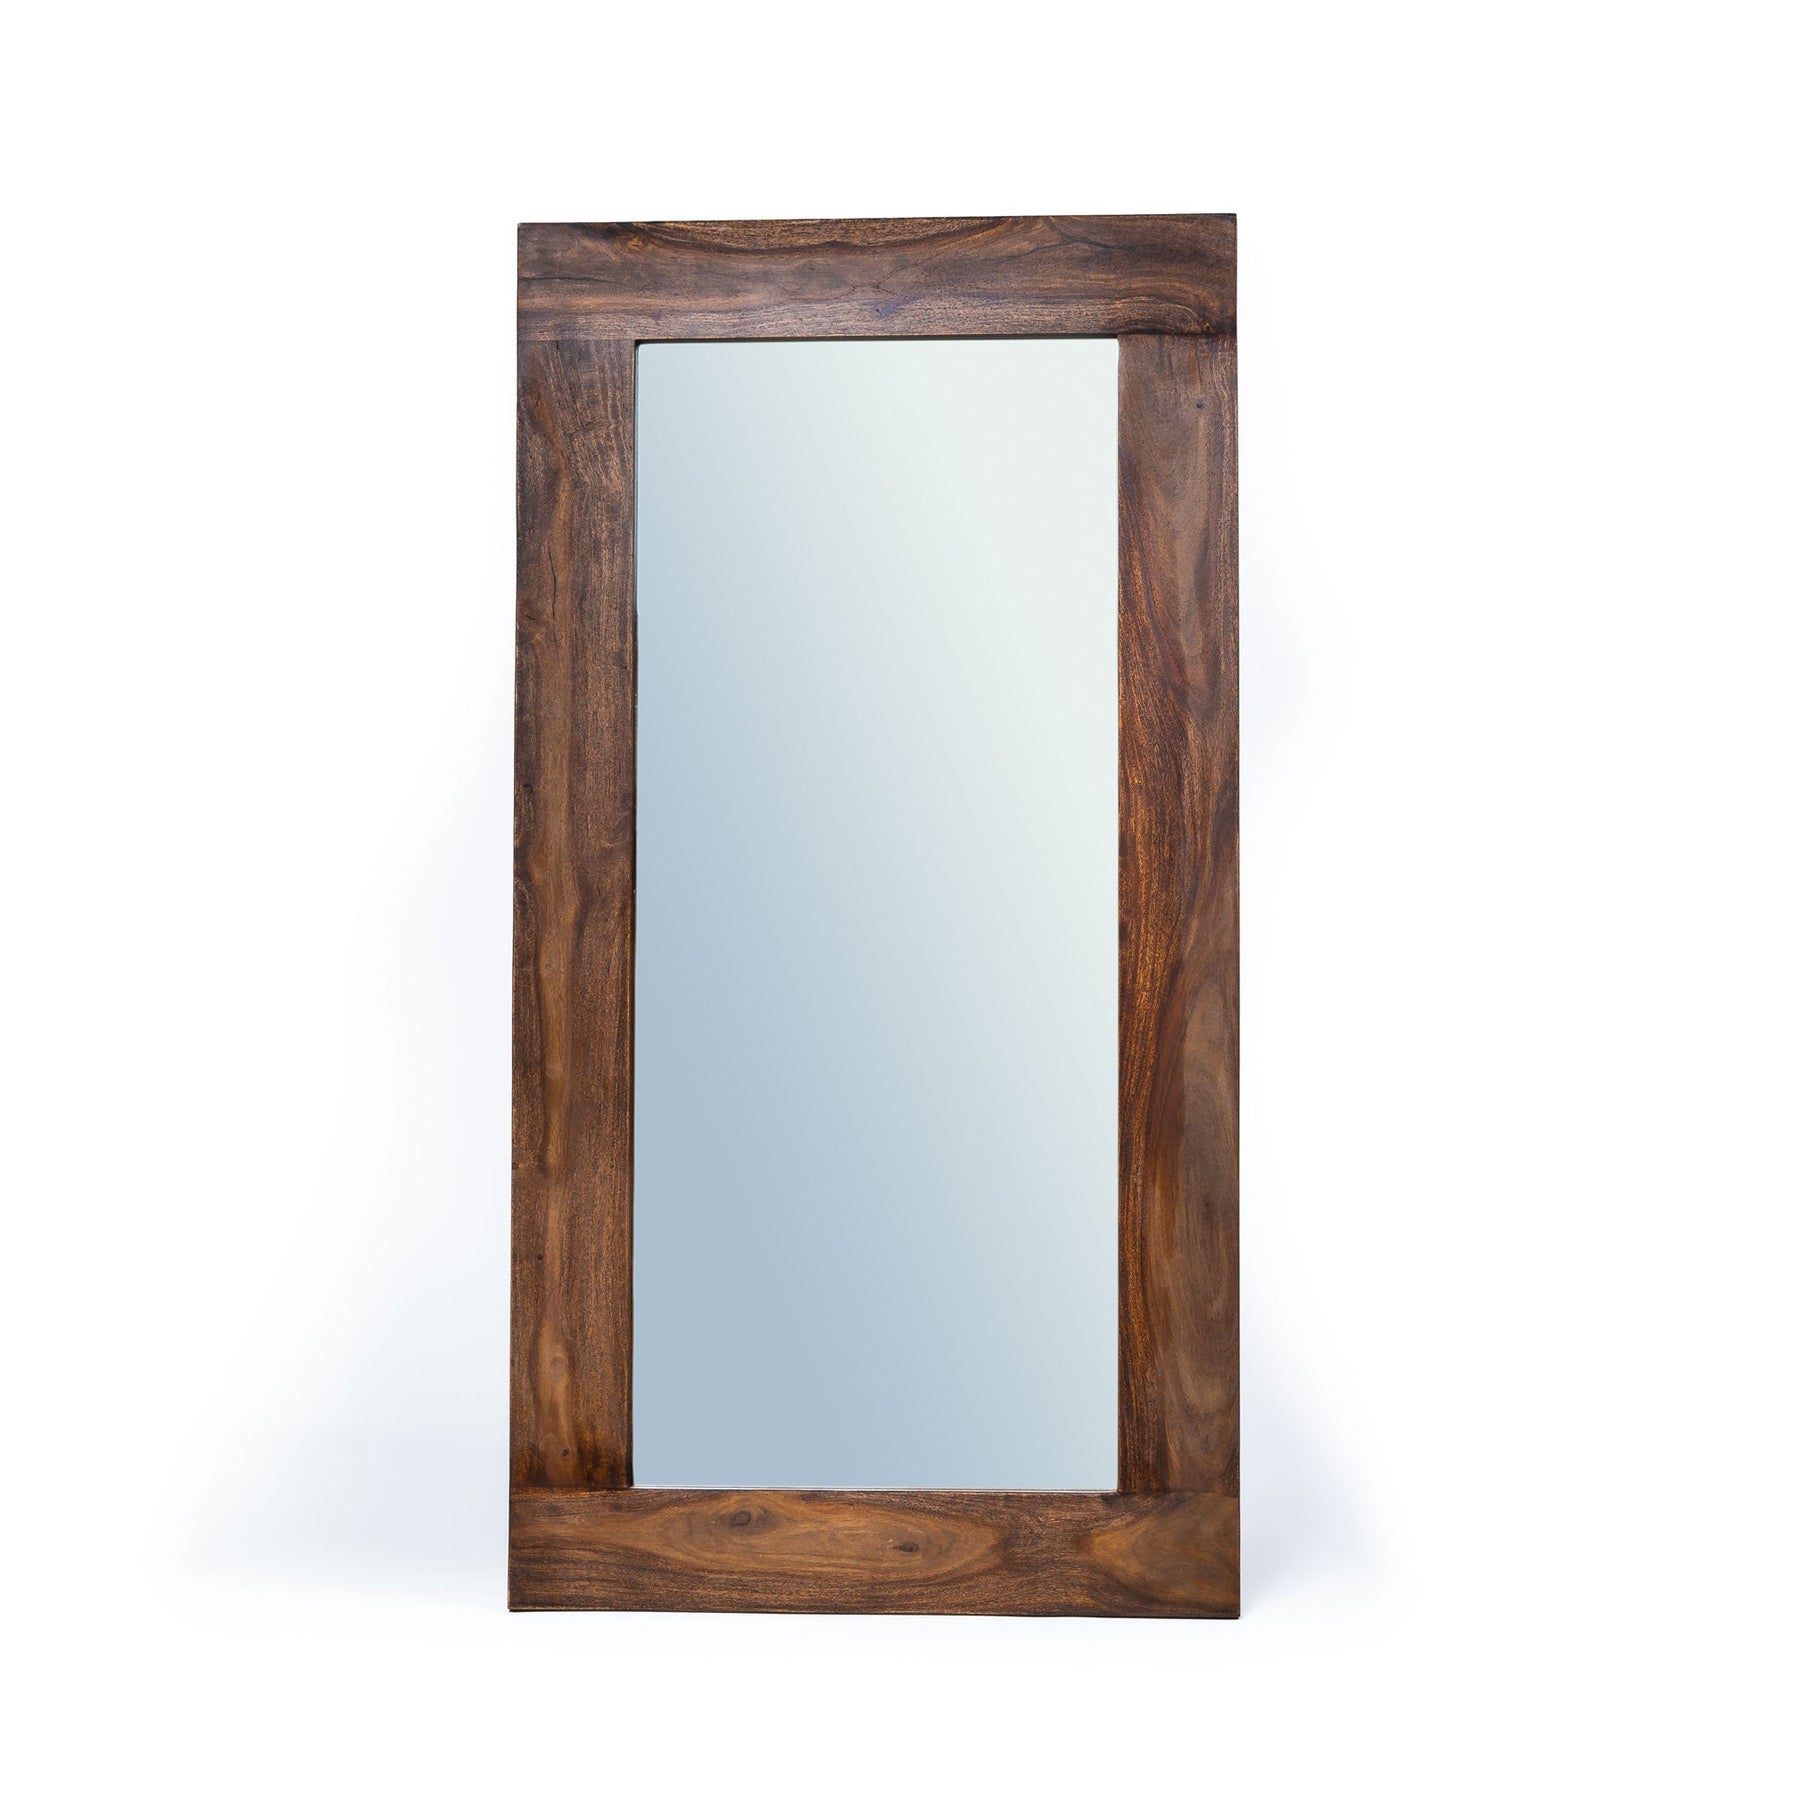 Zen Wall Mirror | Wall Wooden Mirror | Vintage-Look Rectangular Hanging Wall Mirror | 7.6x78x177.8 cm